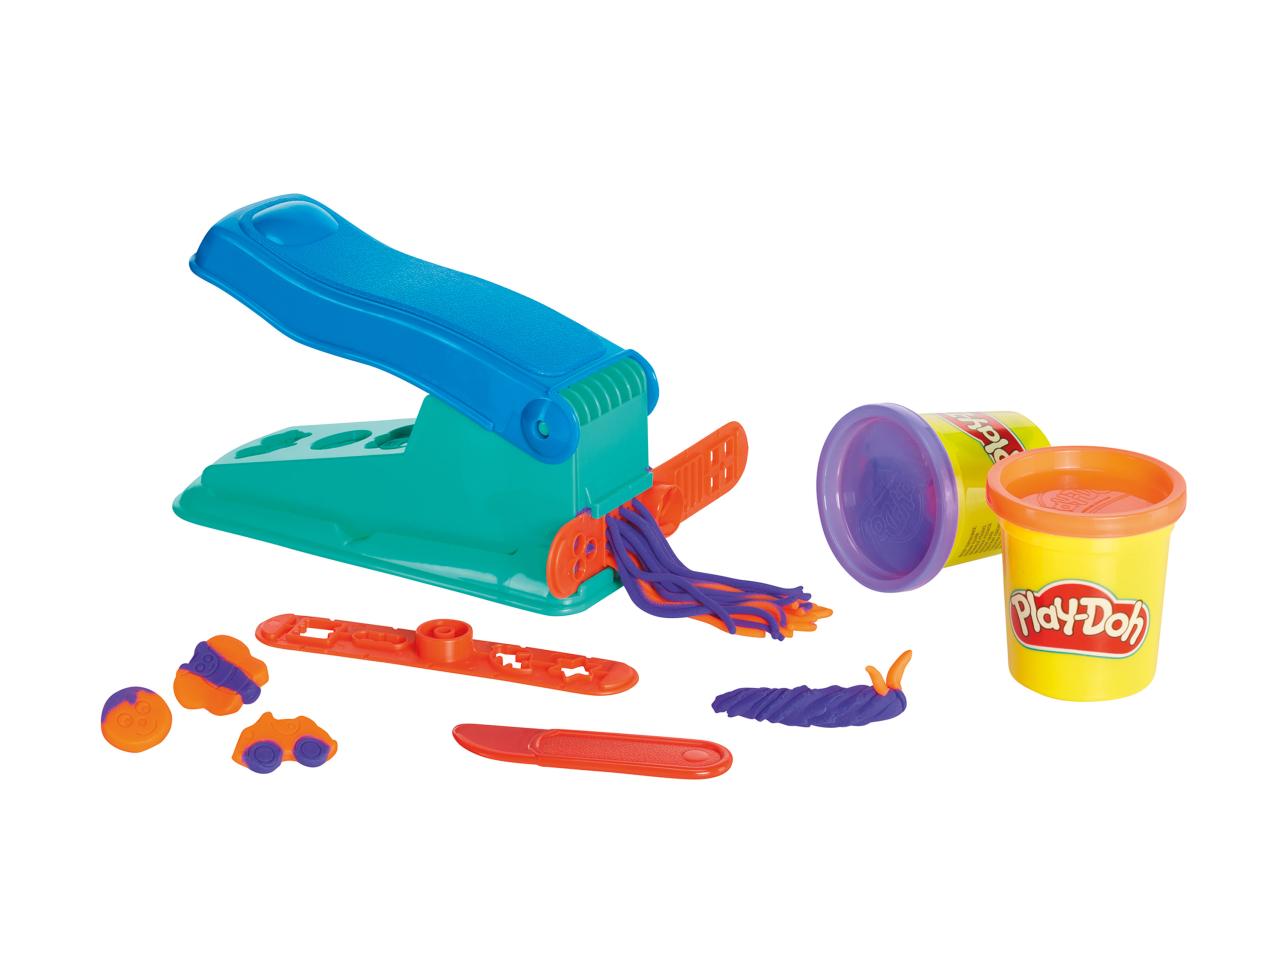 Play-Doh Assortment1